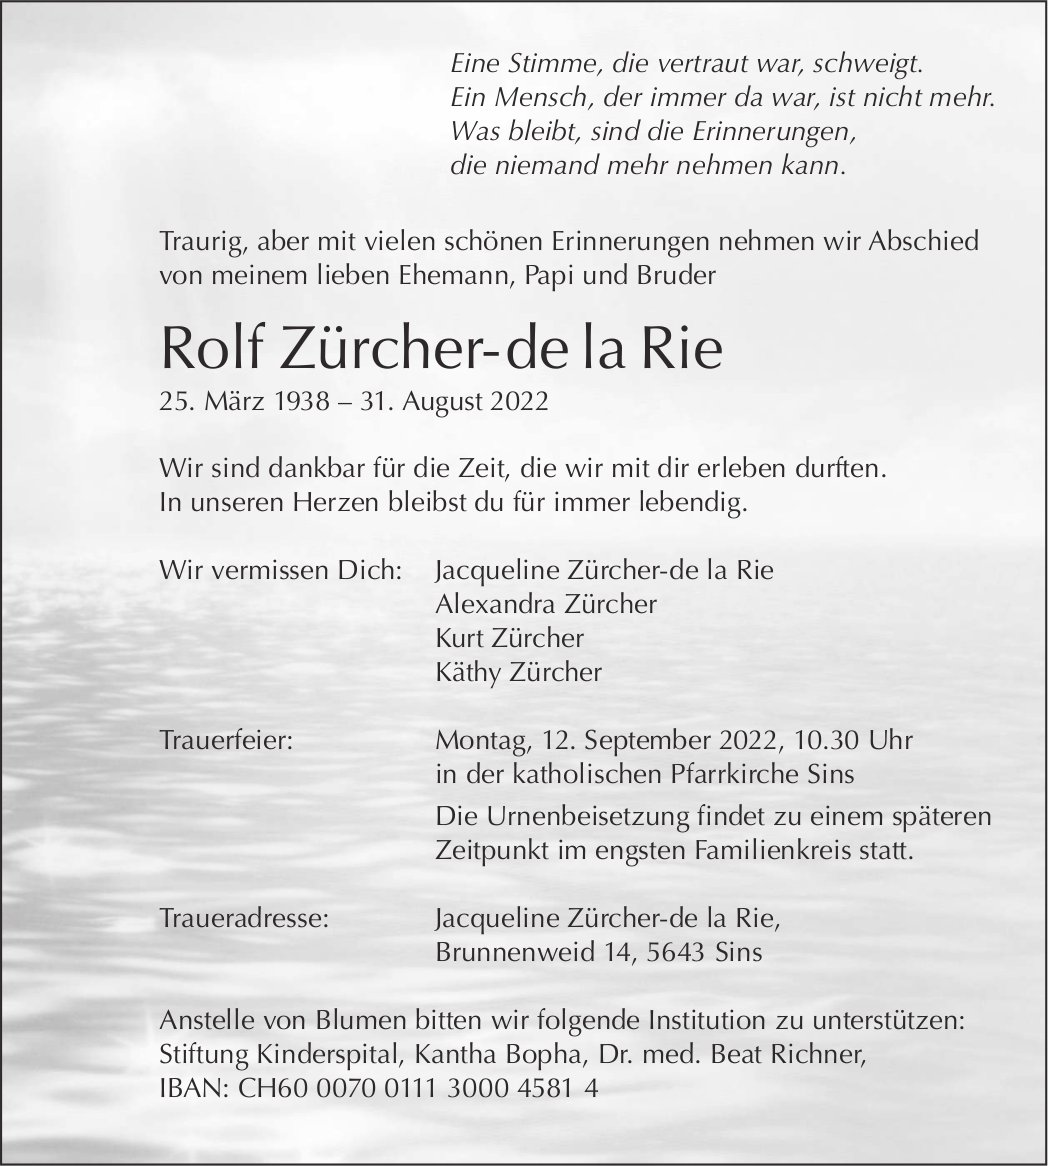 Rolf Zürcher- de la Rie, August 2022 / TA